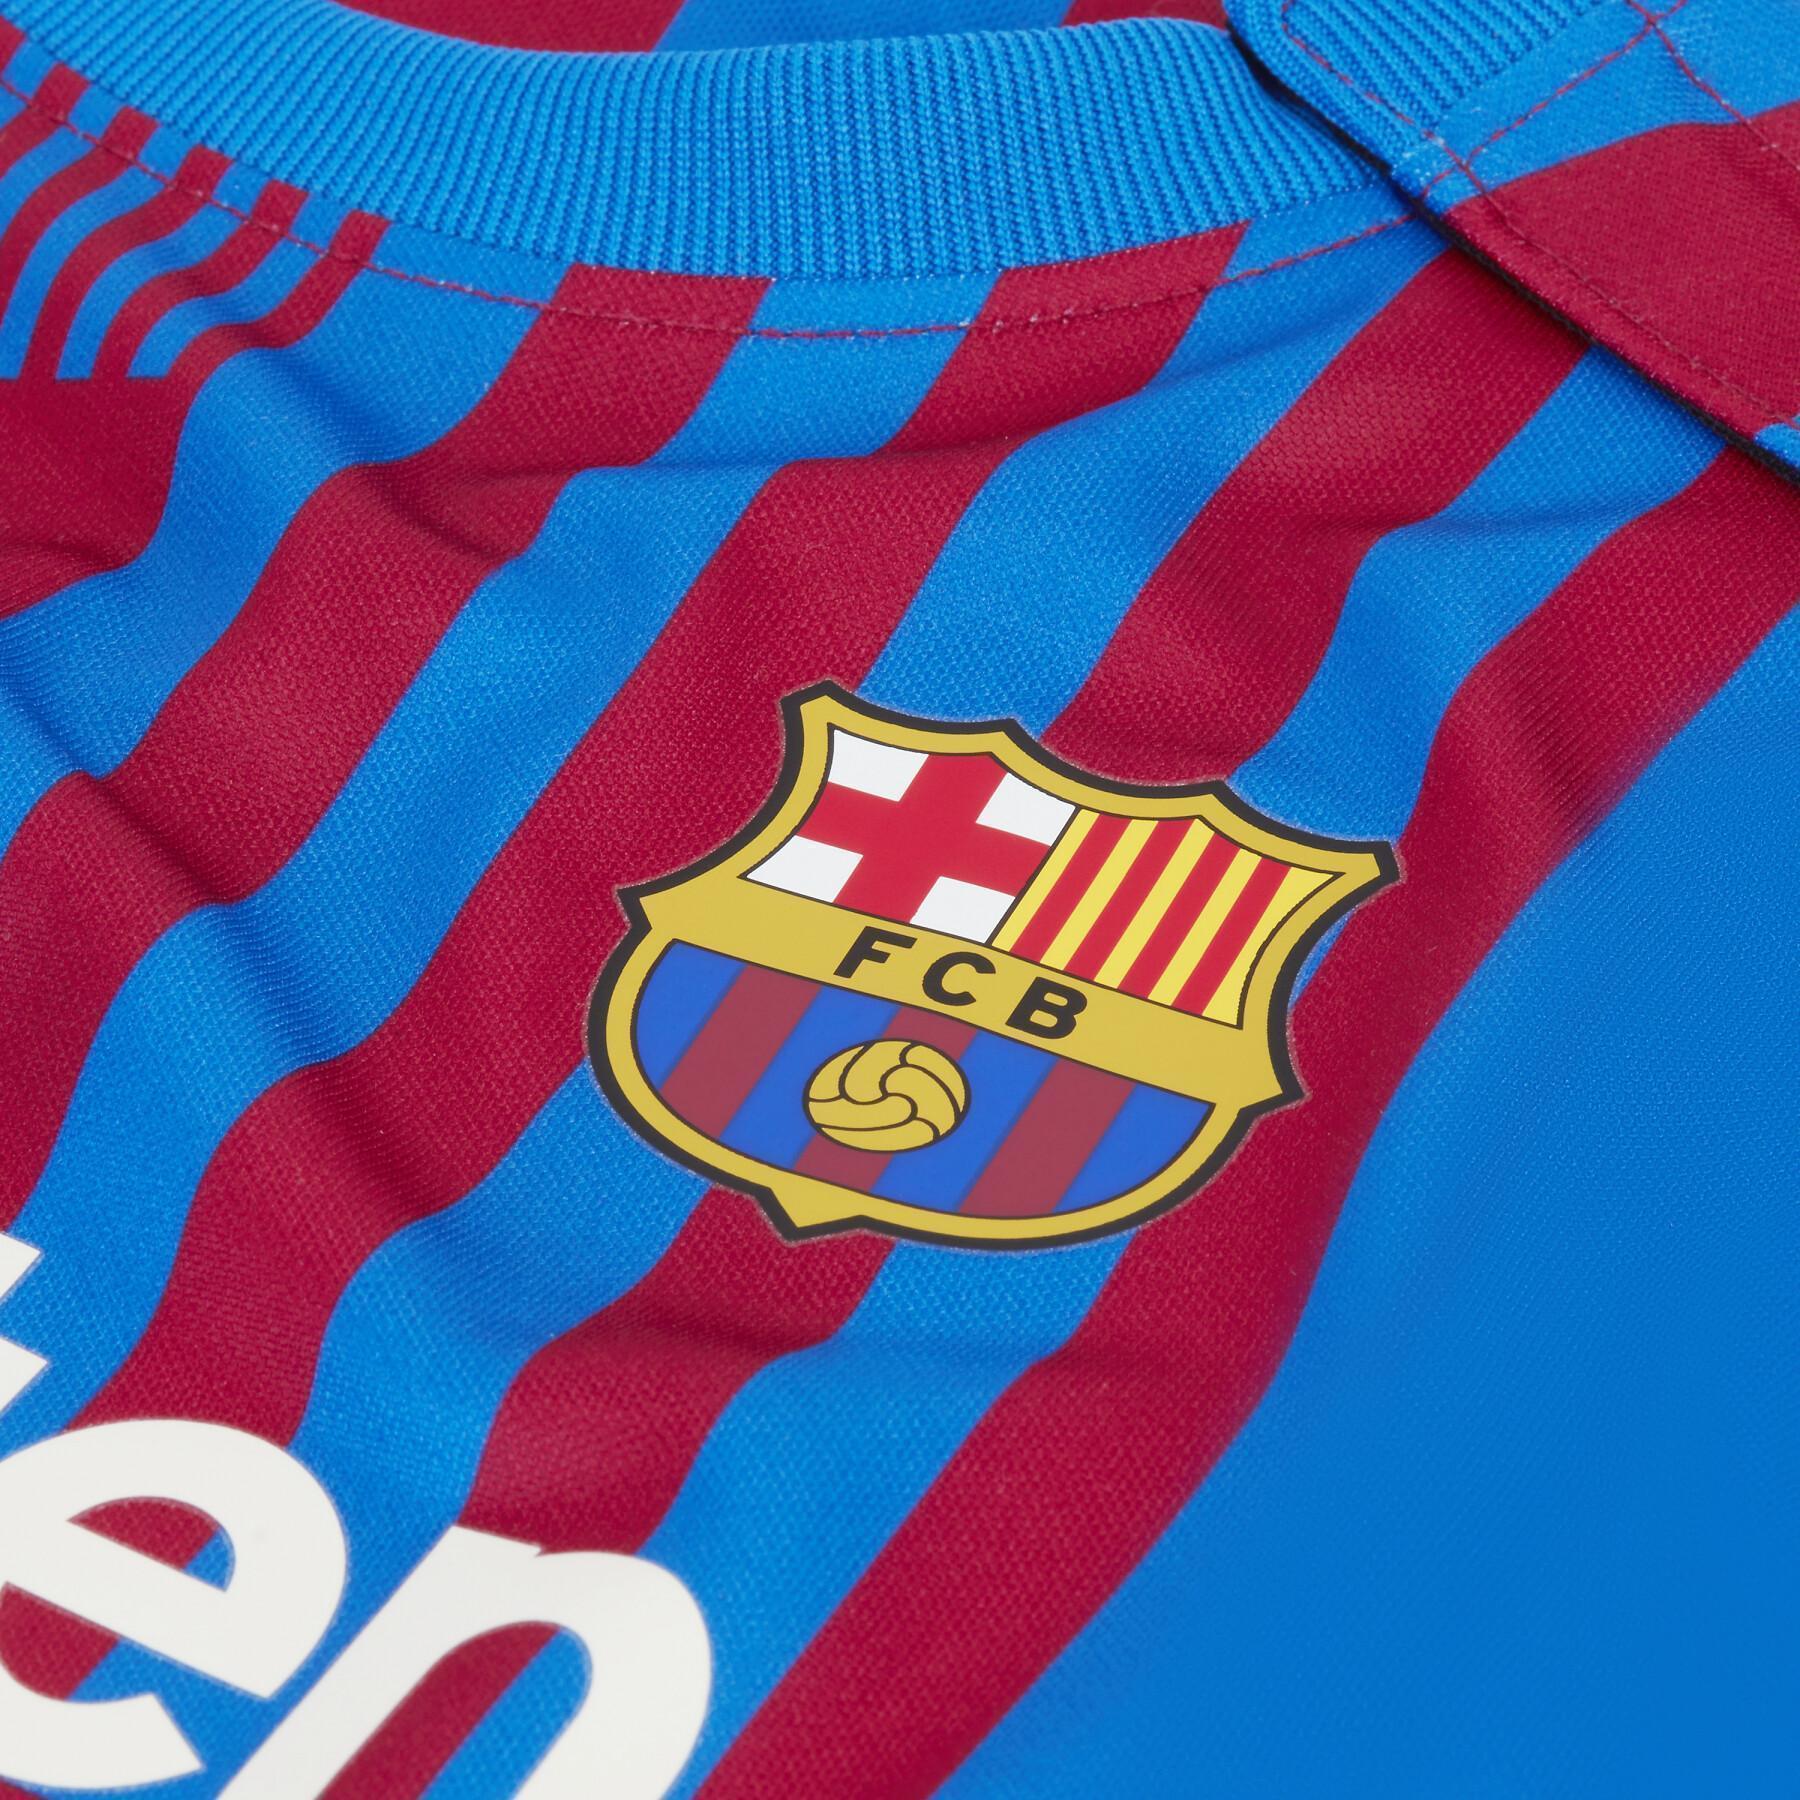 Conjunto para bebés FC Barcelone 2021/22